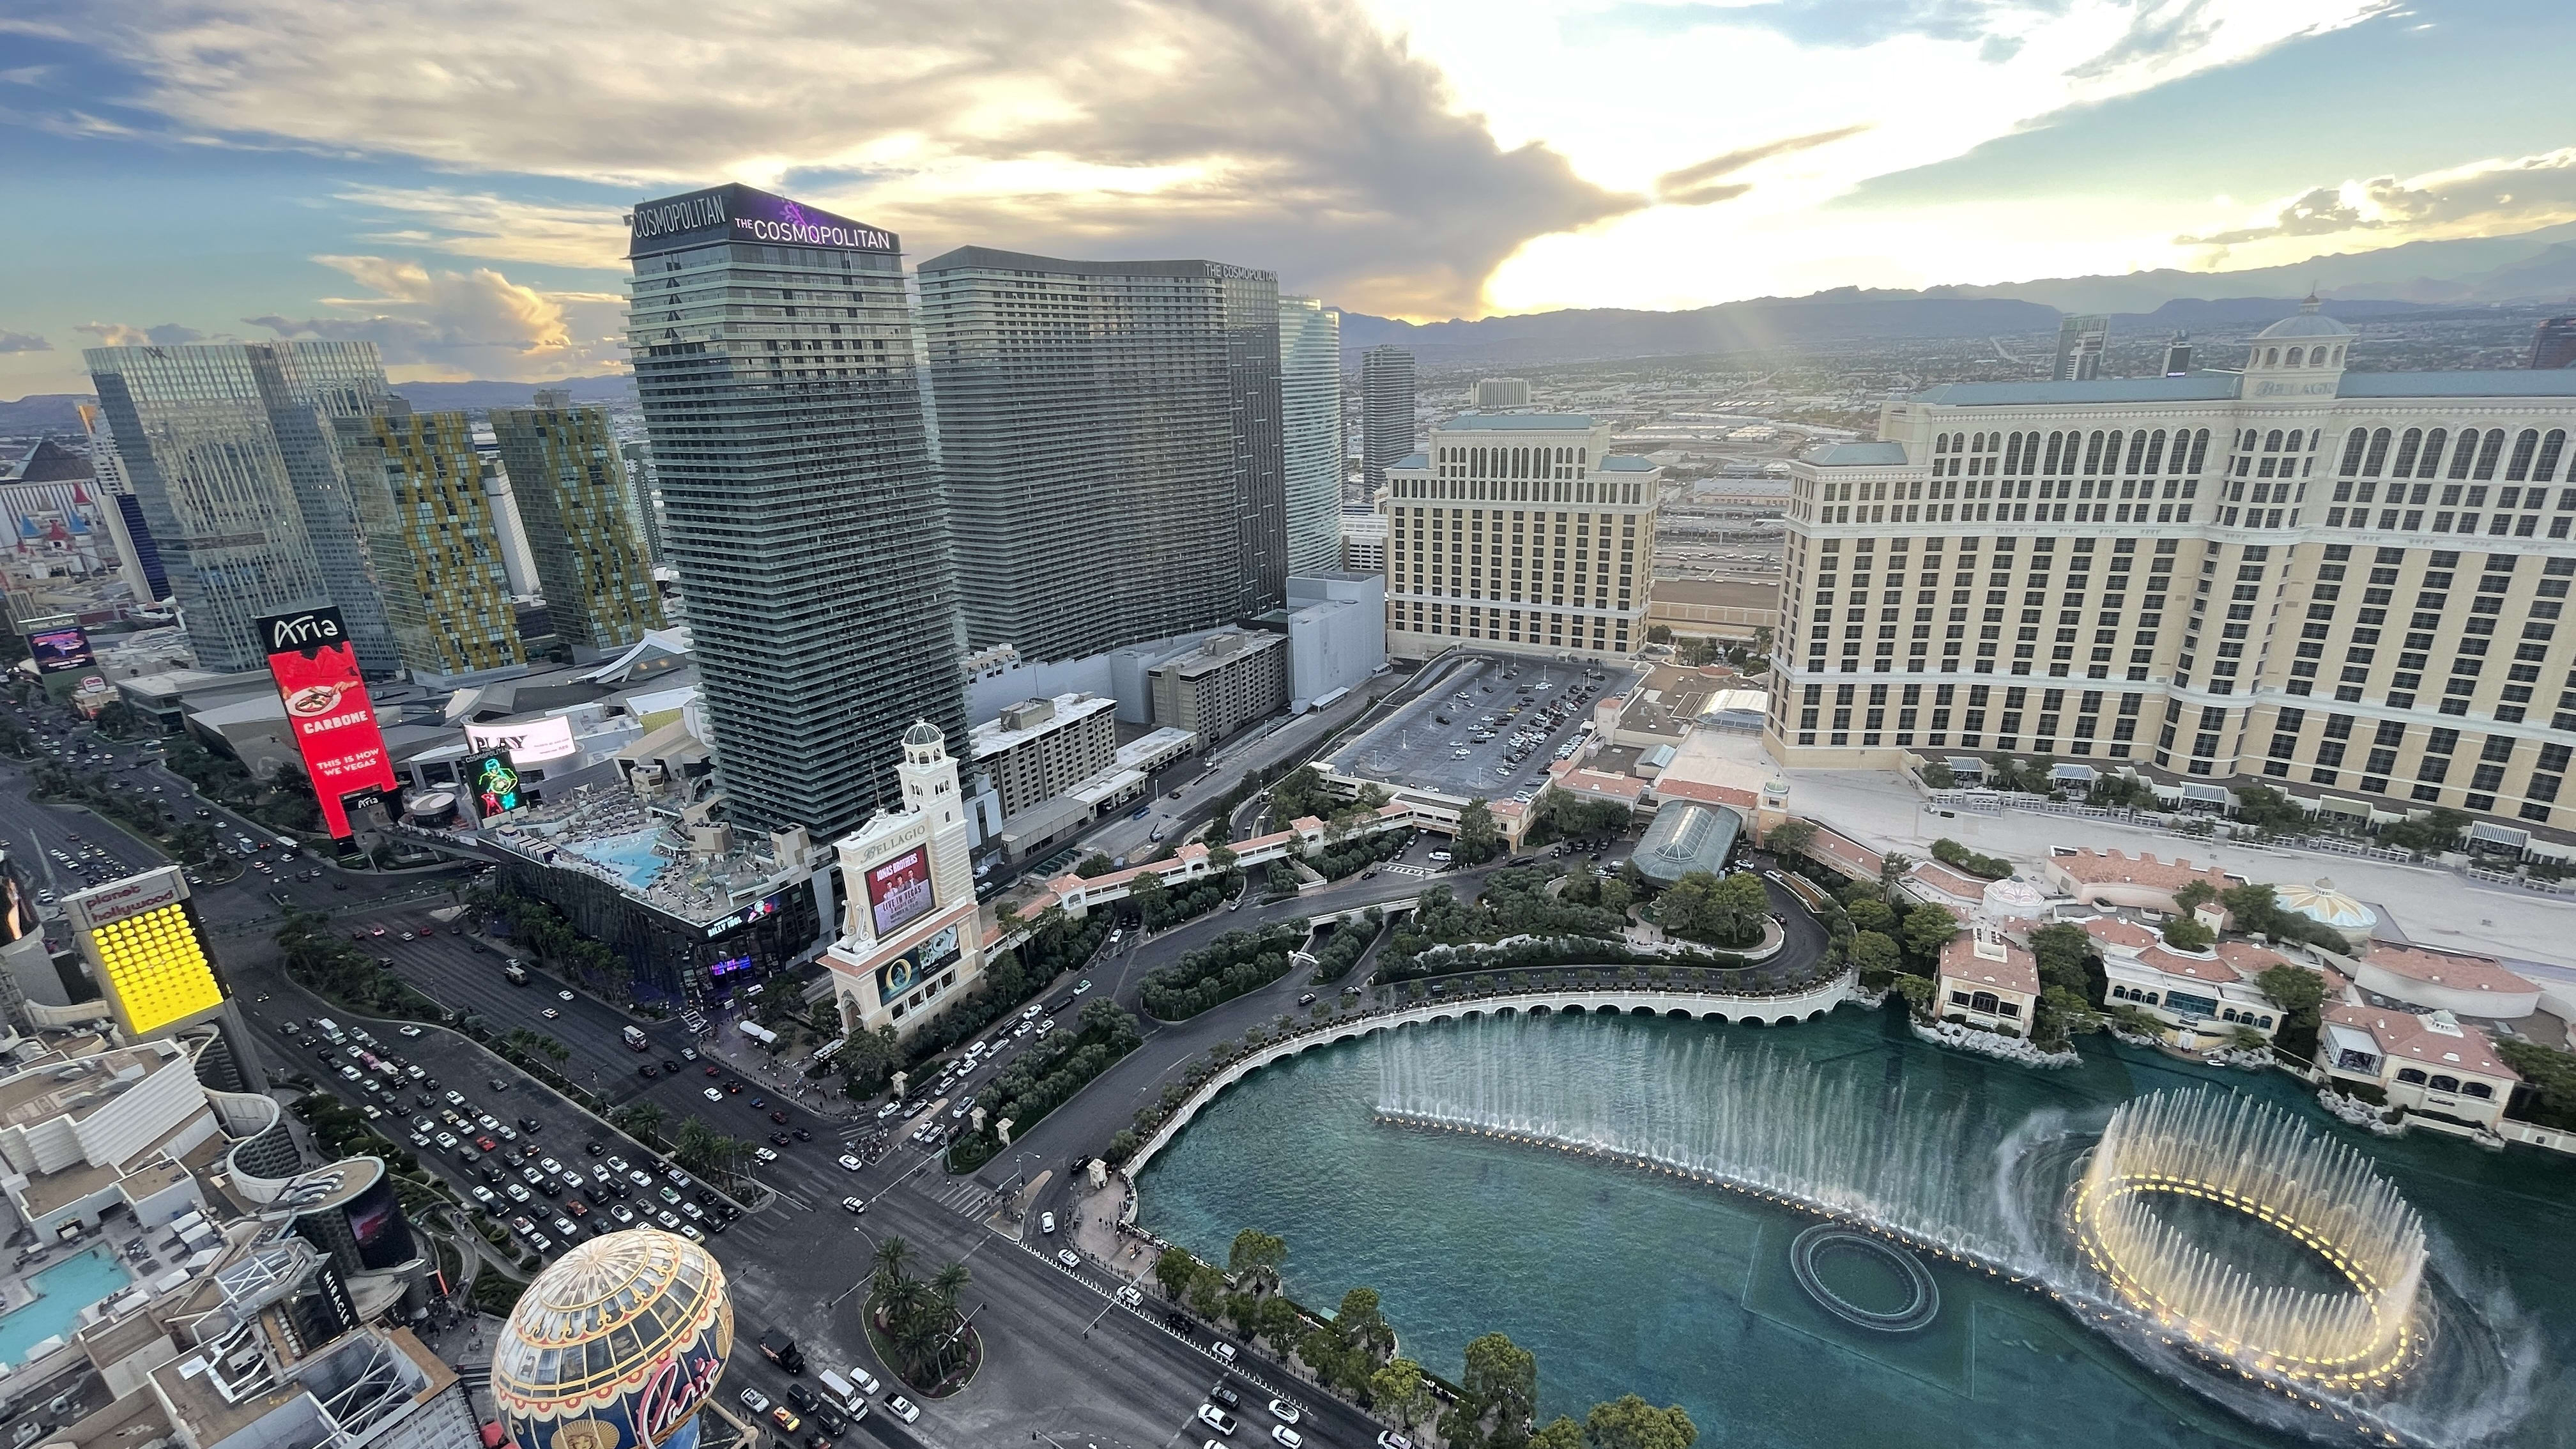 Paris Las Vegas Resort & Casino in Las Vegas: Find Hotel Reviews, Rooms,  and Prices on